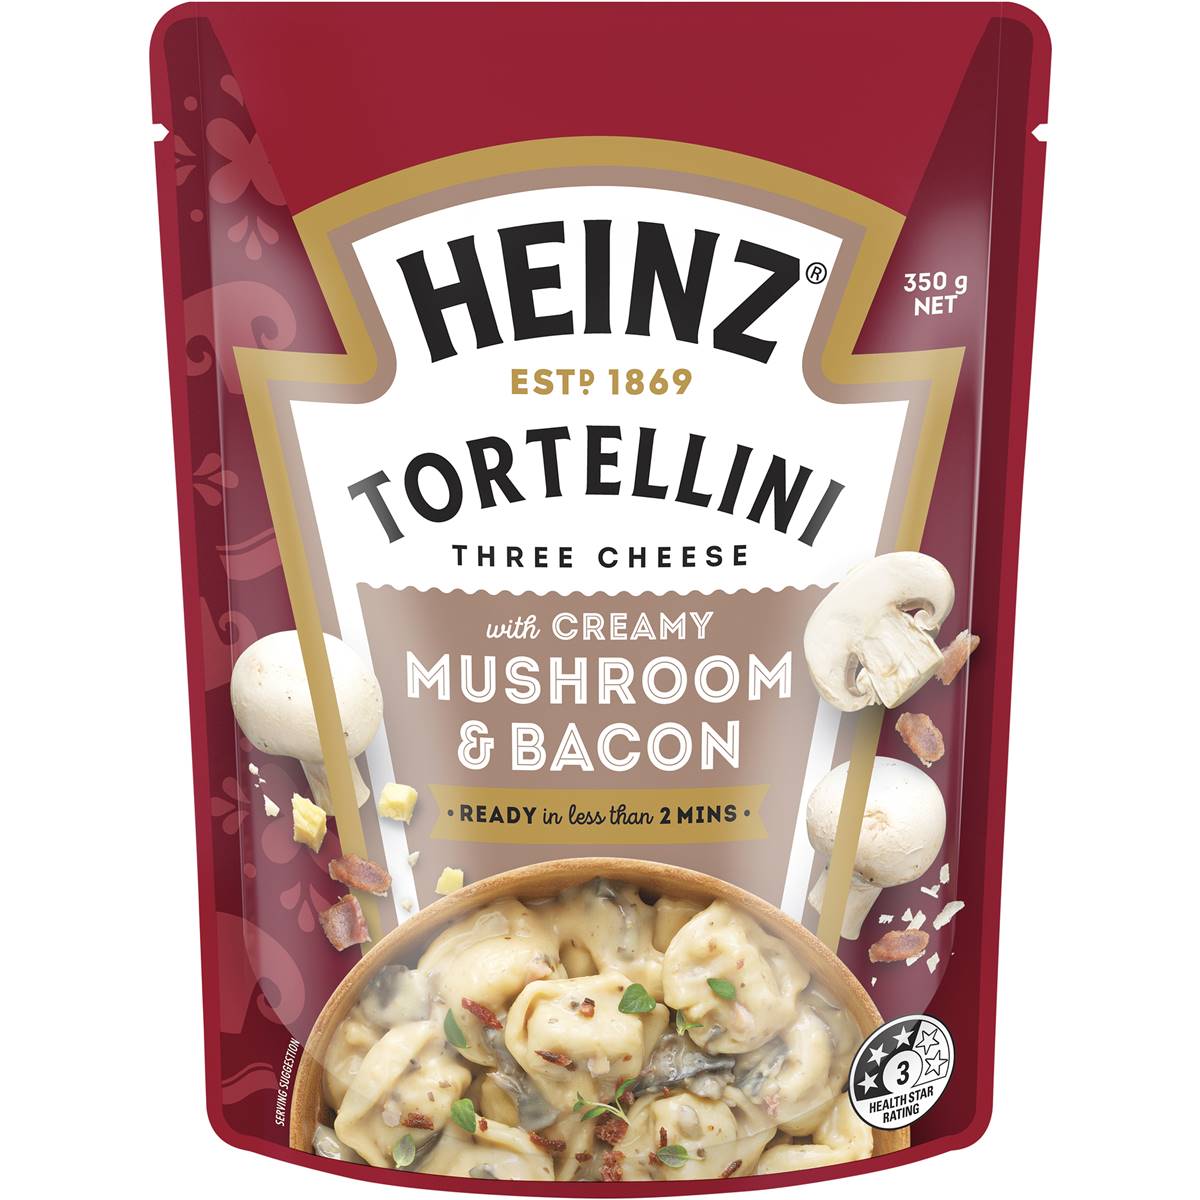 Heinz Tortellini Three Cheese Pasta With Creamy Mushroom & Bacon 350g